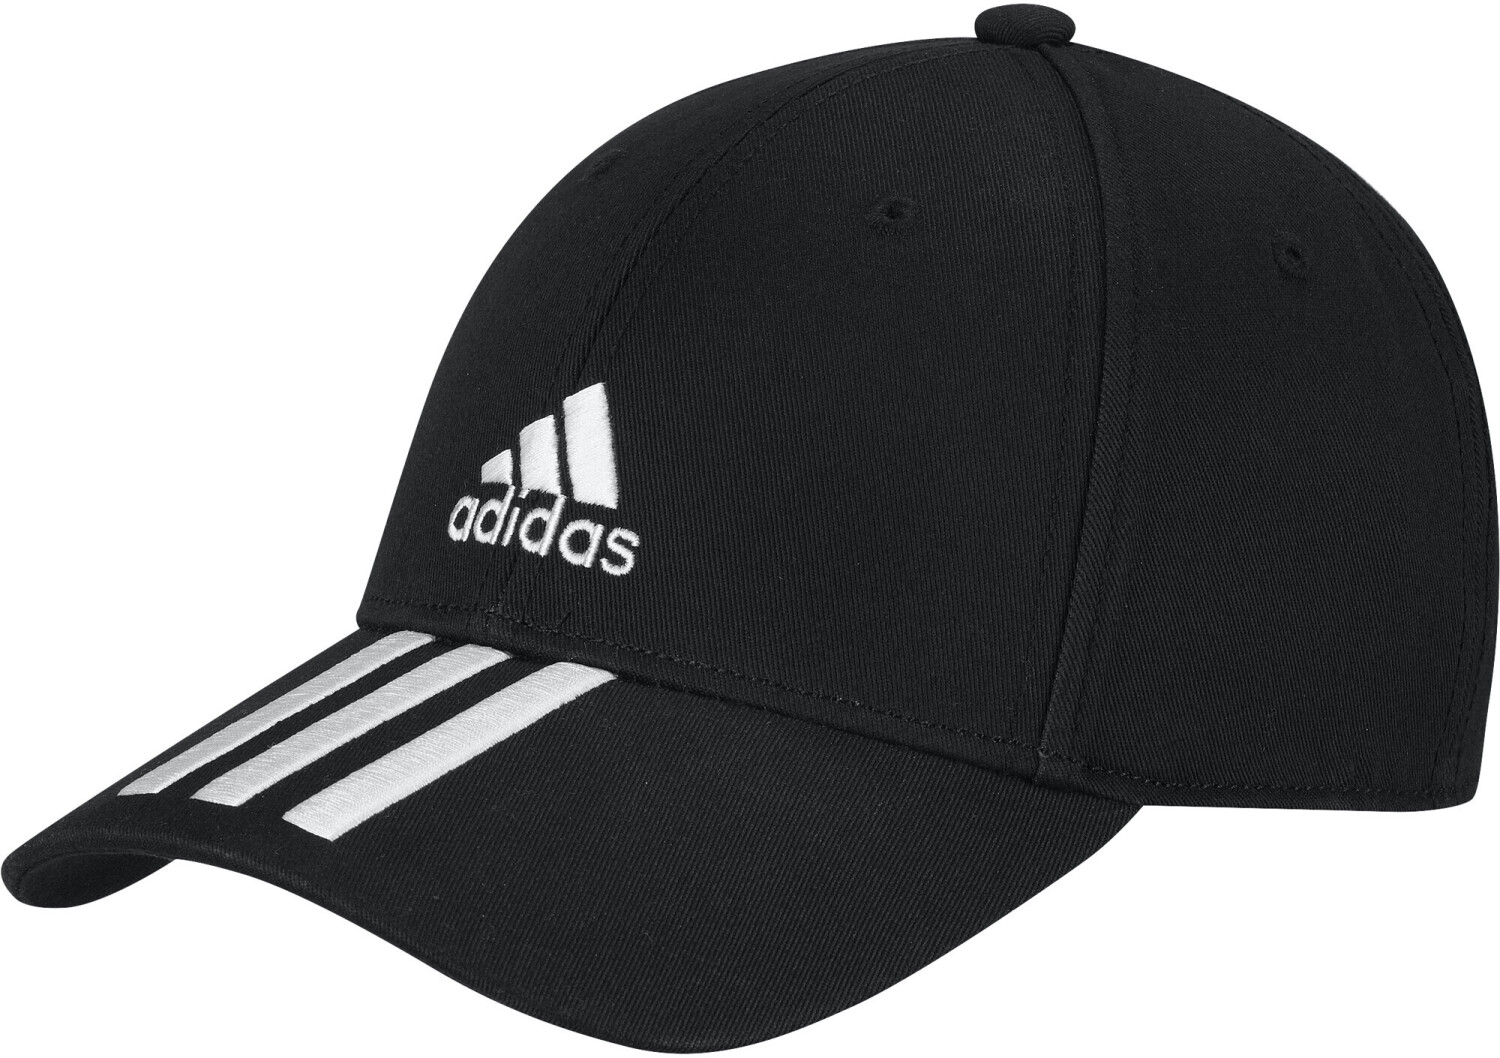 Adidas Baseball 3-Stripes Twill Cap black/white ab 10,99 € | Preisvergleich  bei